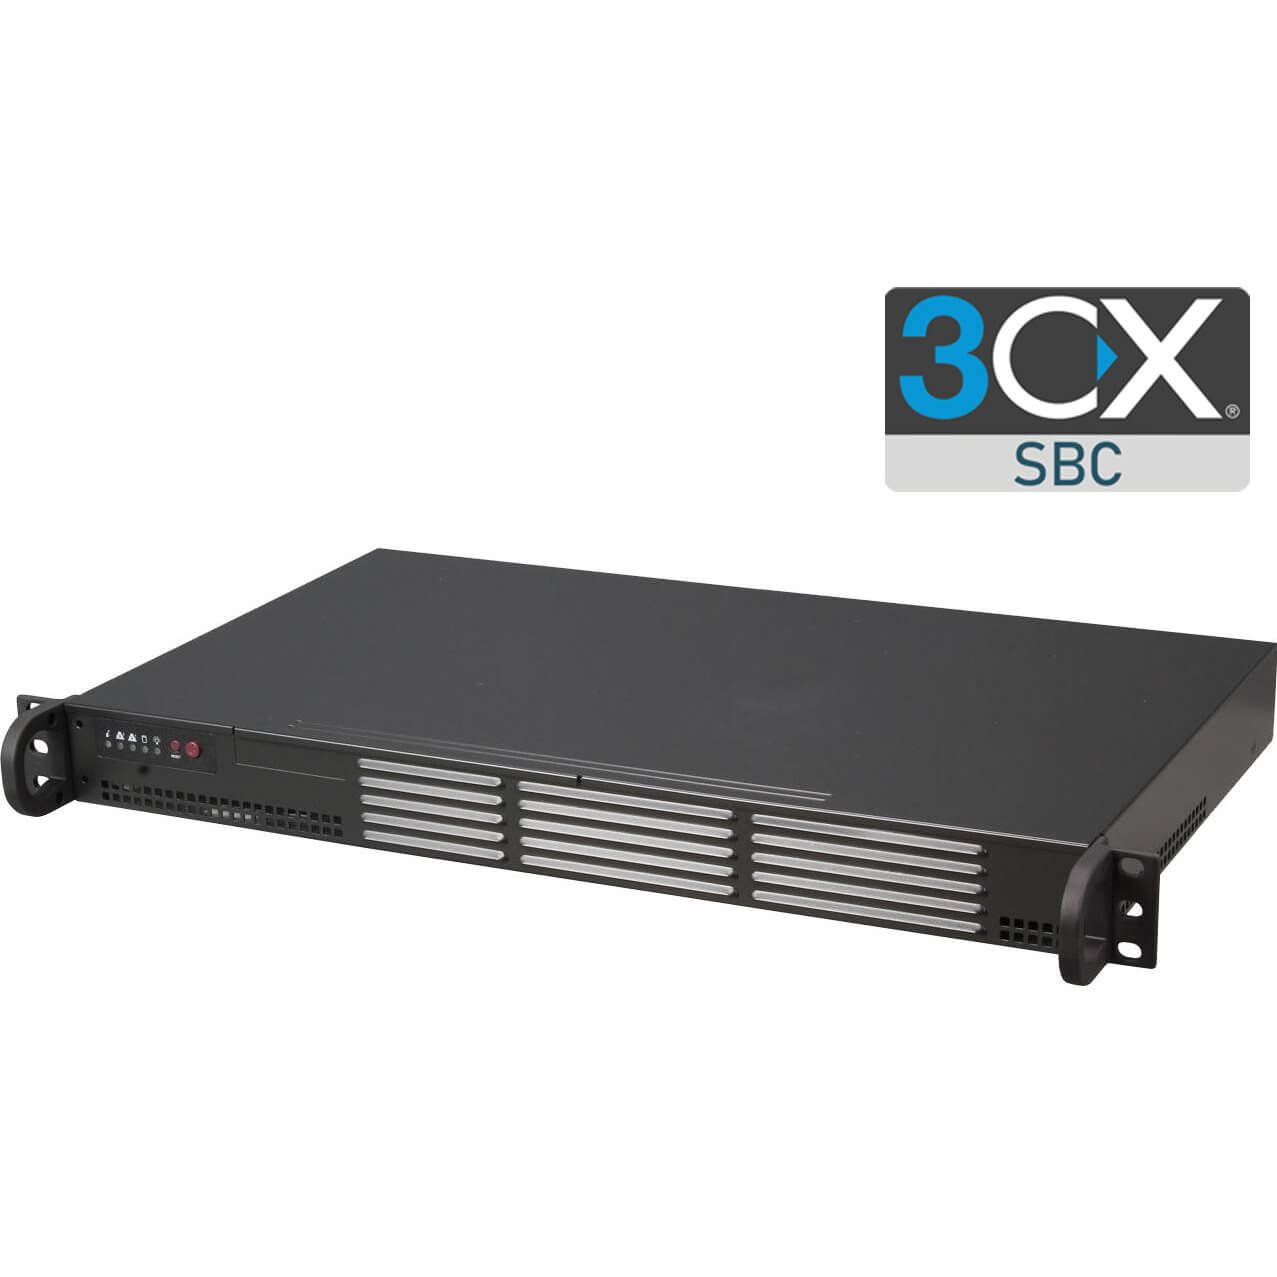   Serveur IPBX   SBC 3CX 19 pr-install jusqu' 30 devices CX-SERVR-SBC